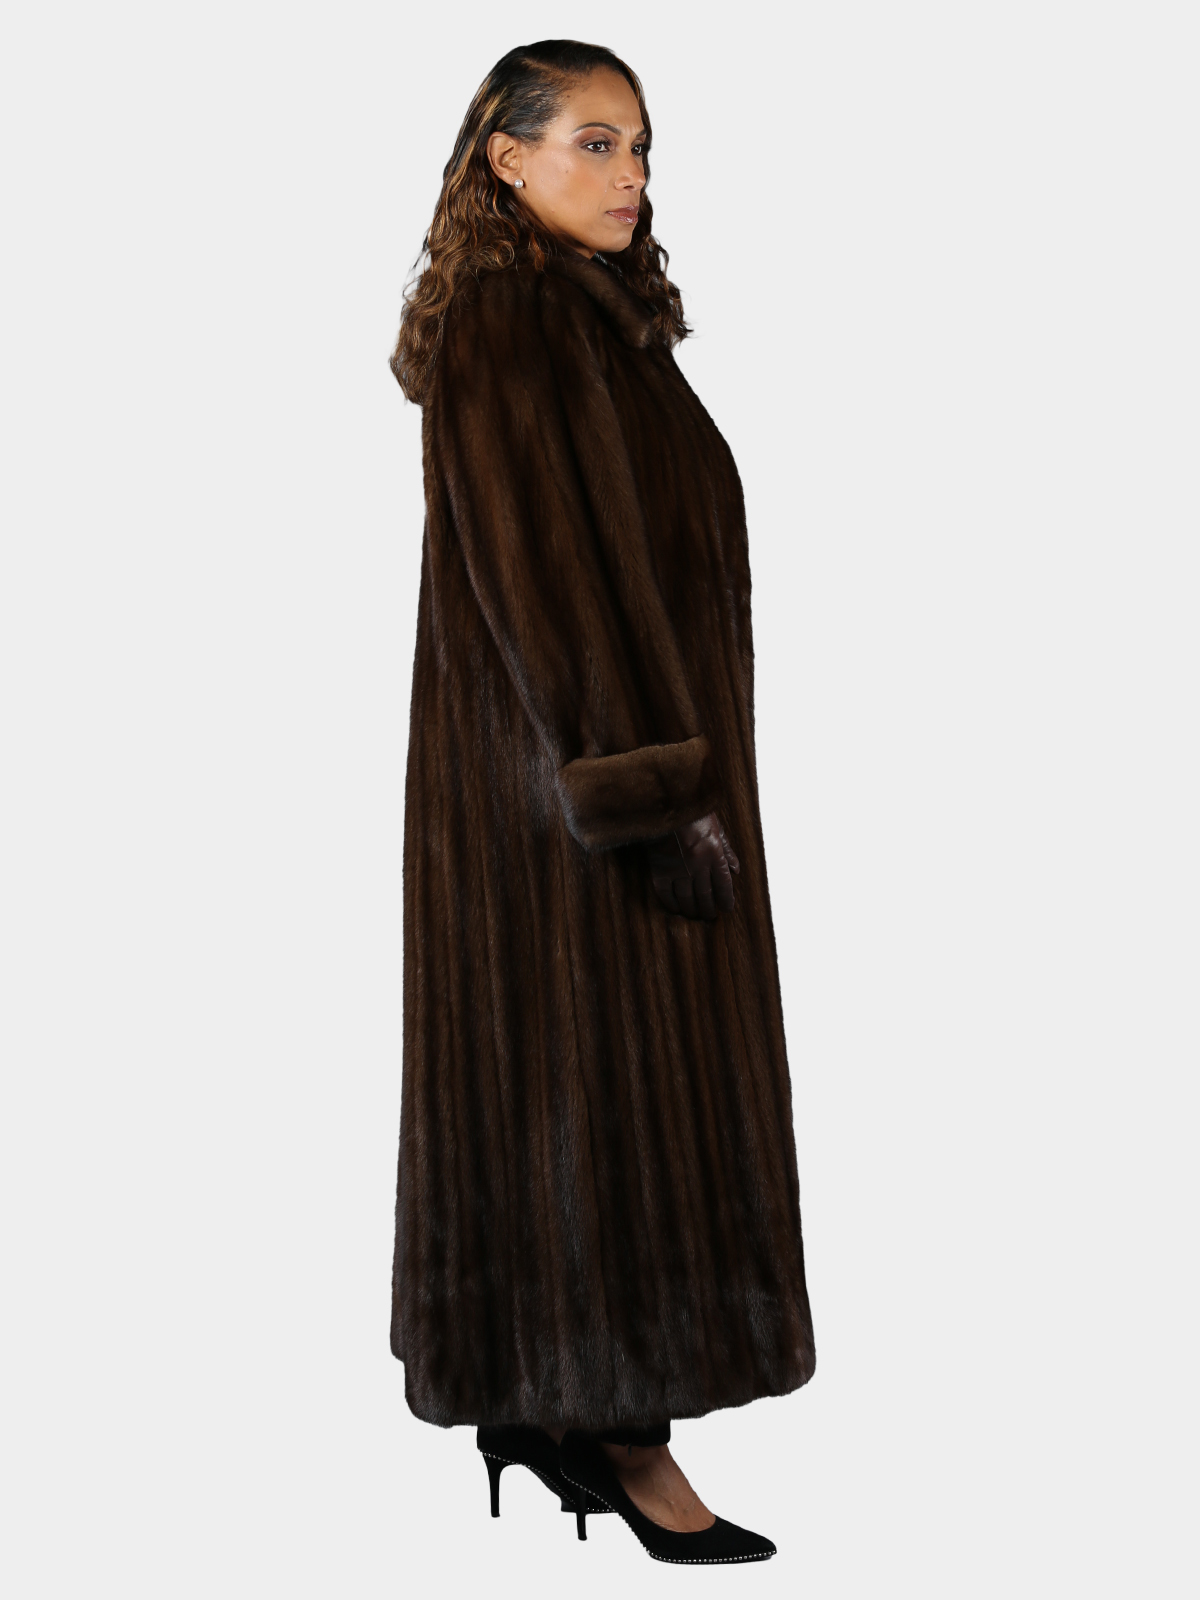 Woman's Guy Laroche Mahogany Female Mink Fur Coat - Estate Furs